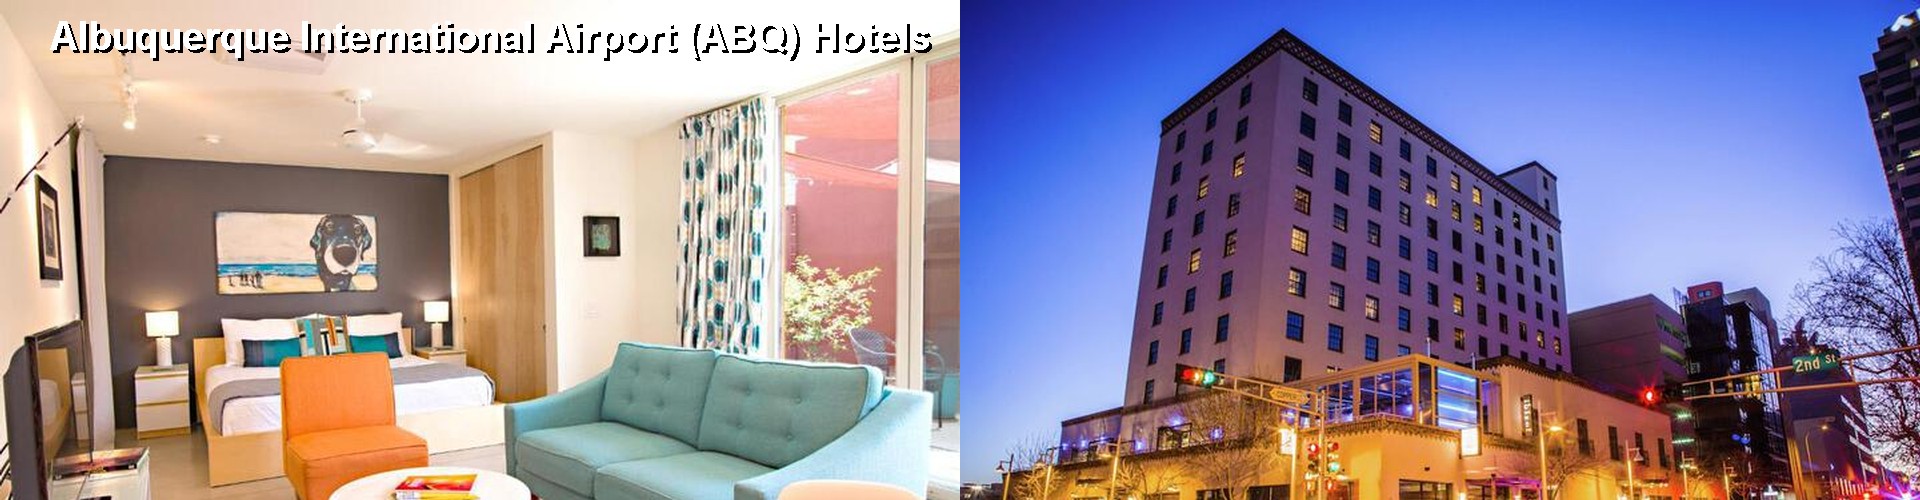 5 Best Hotels near Albuquerque International Airport (ABQ)